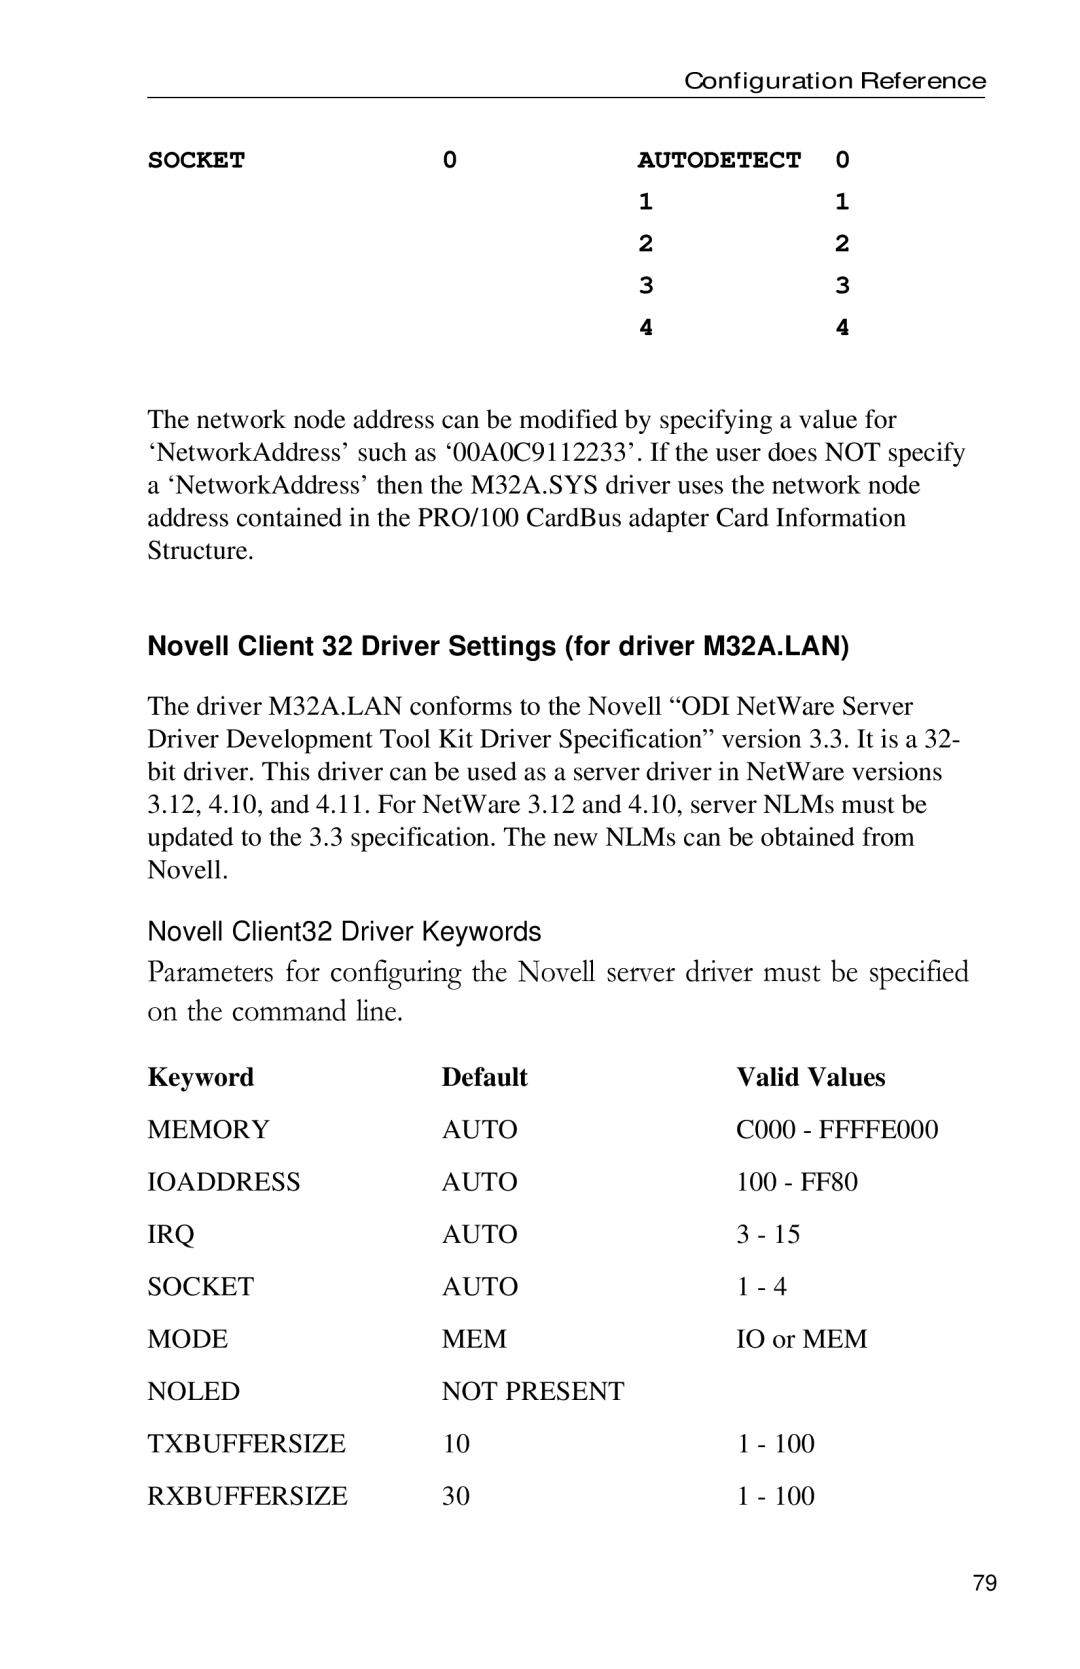 Intel PRO appendix Socket Autodetect, Novell Client 32 Driver Settings for driver M32A.LAN, Keyword Default Valid Values 